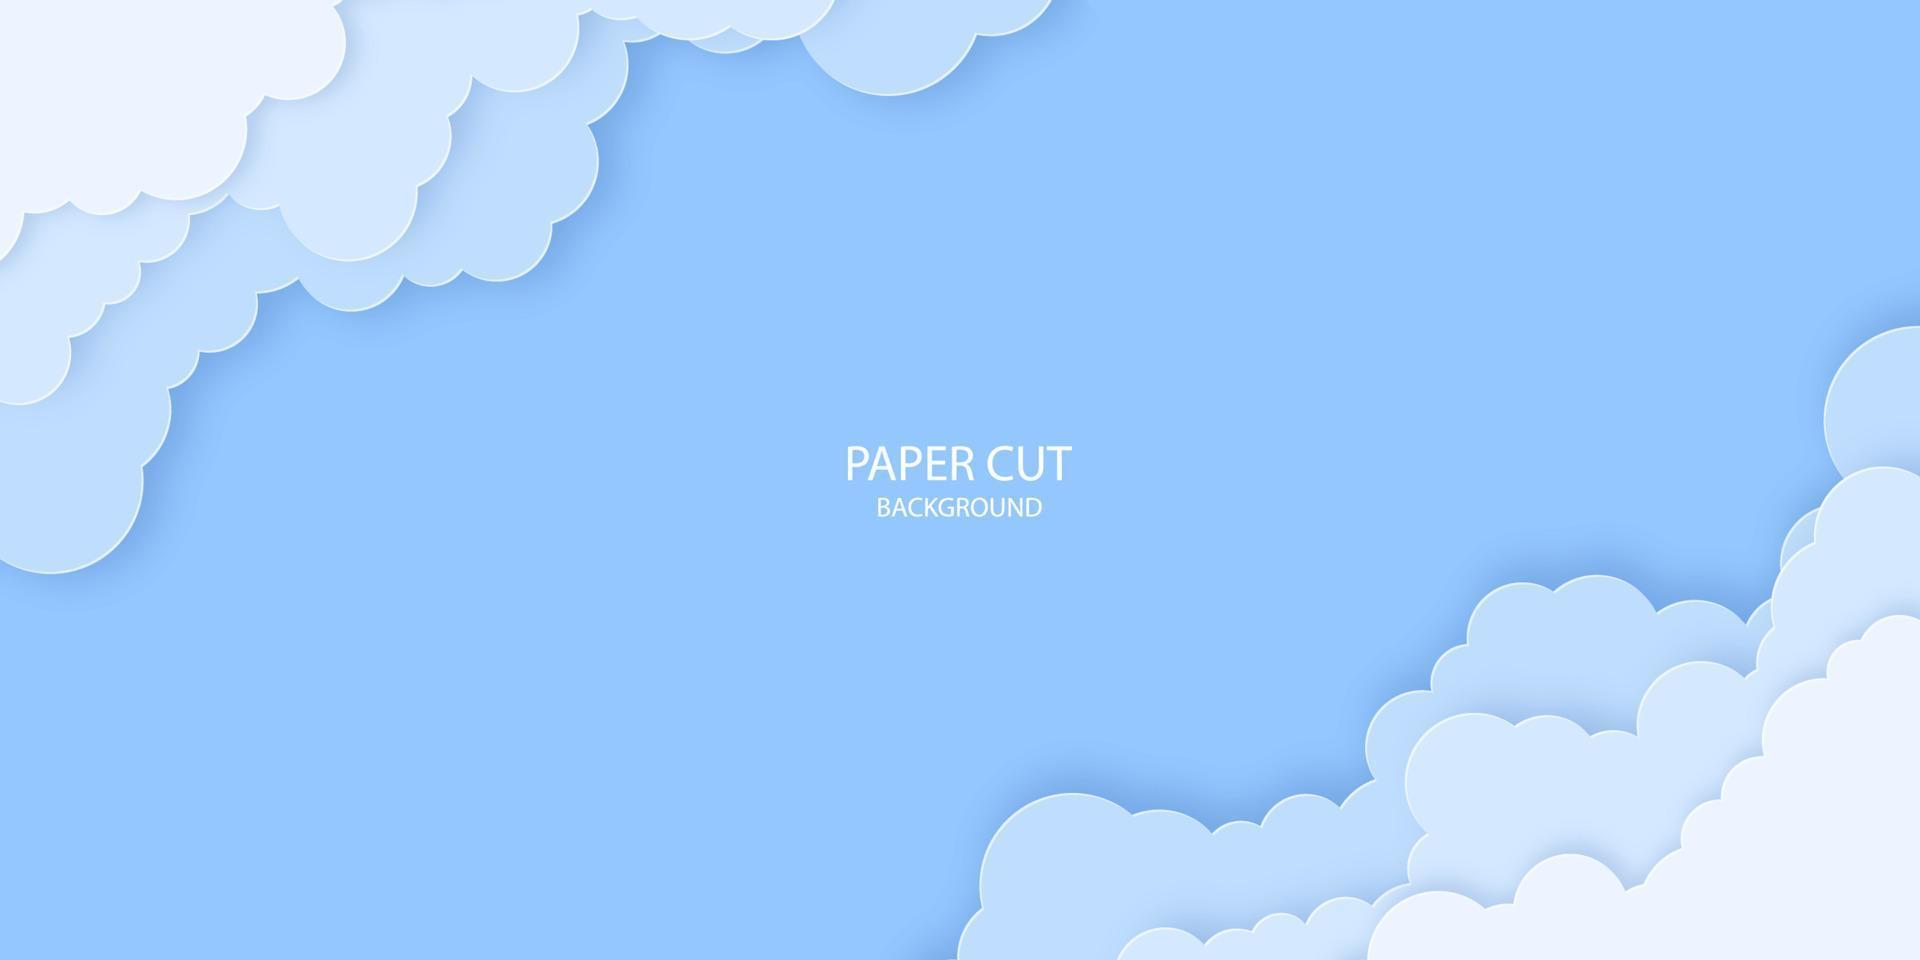 mullido papel cortar fuera nubes en azul cielo antecedentes. vector